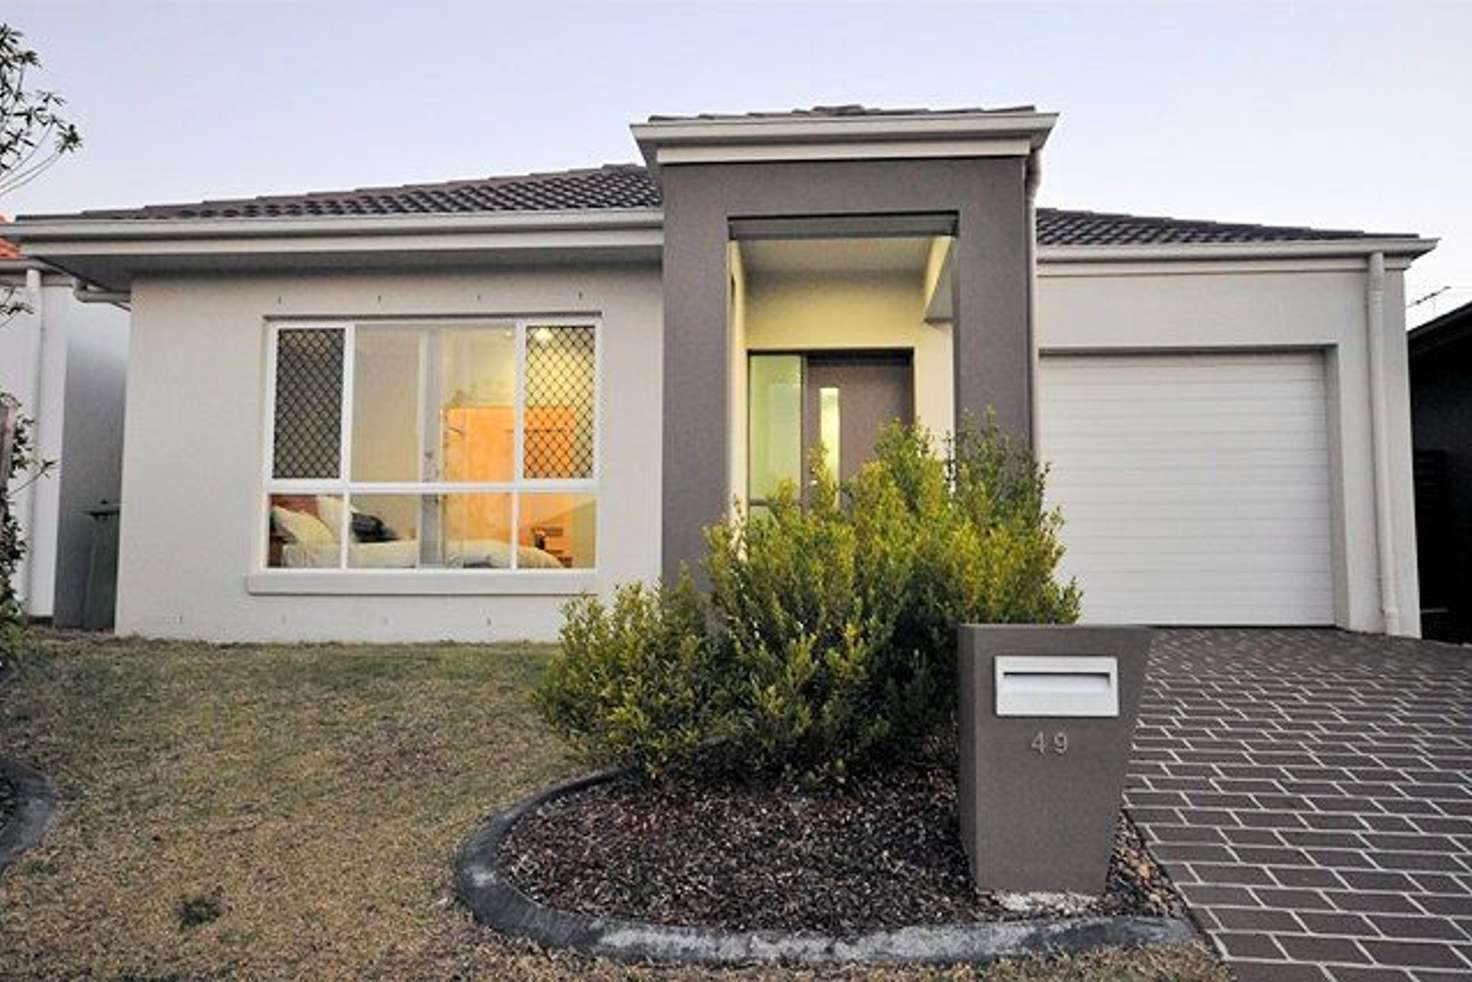 Main view of Homely house listing, 49 Lanagan Circuit, North Lakes QLD 4509